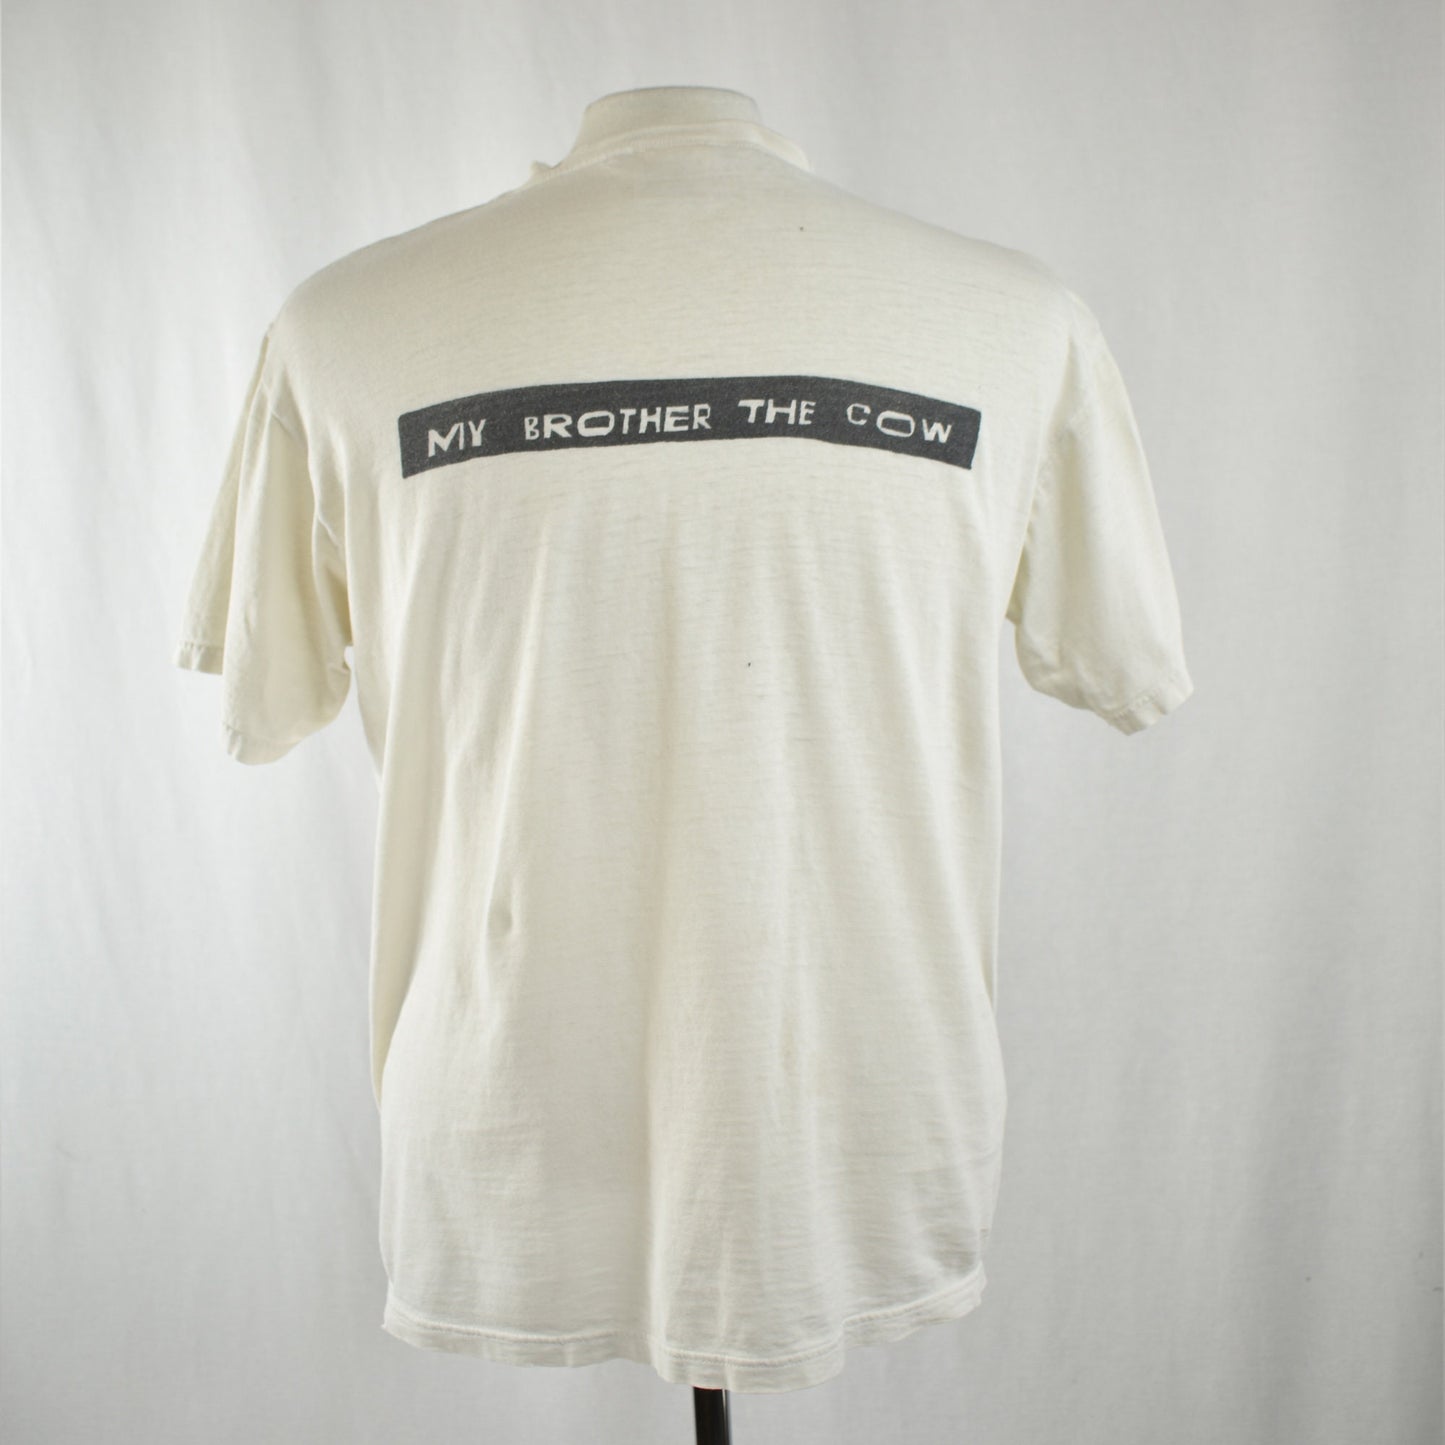 Vintage Mudhoney T-shirt